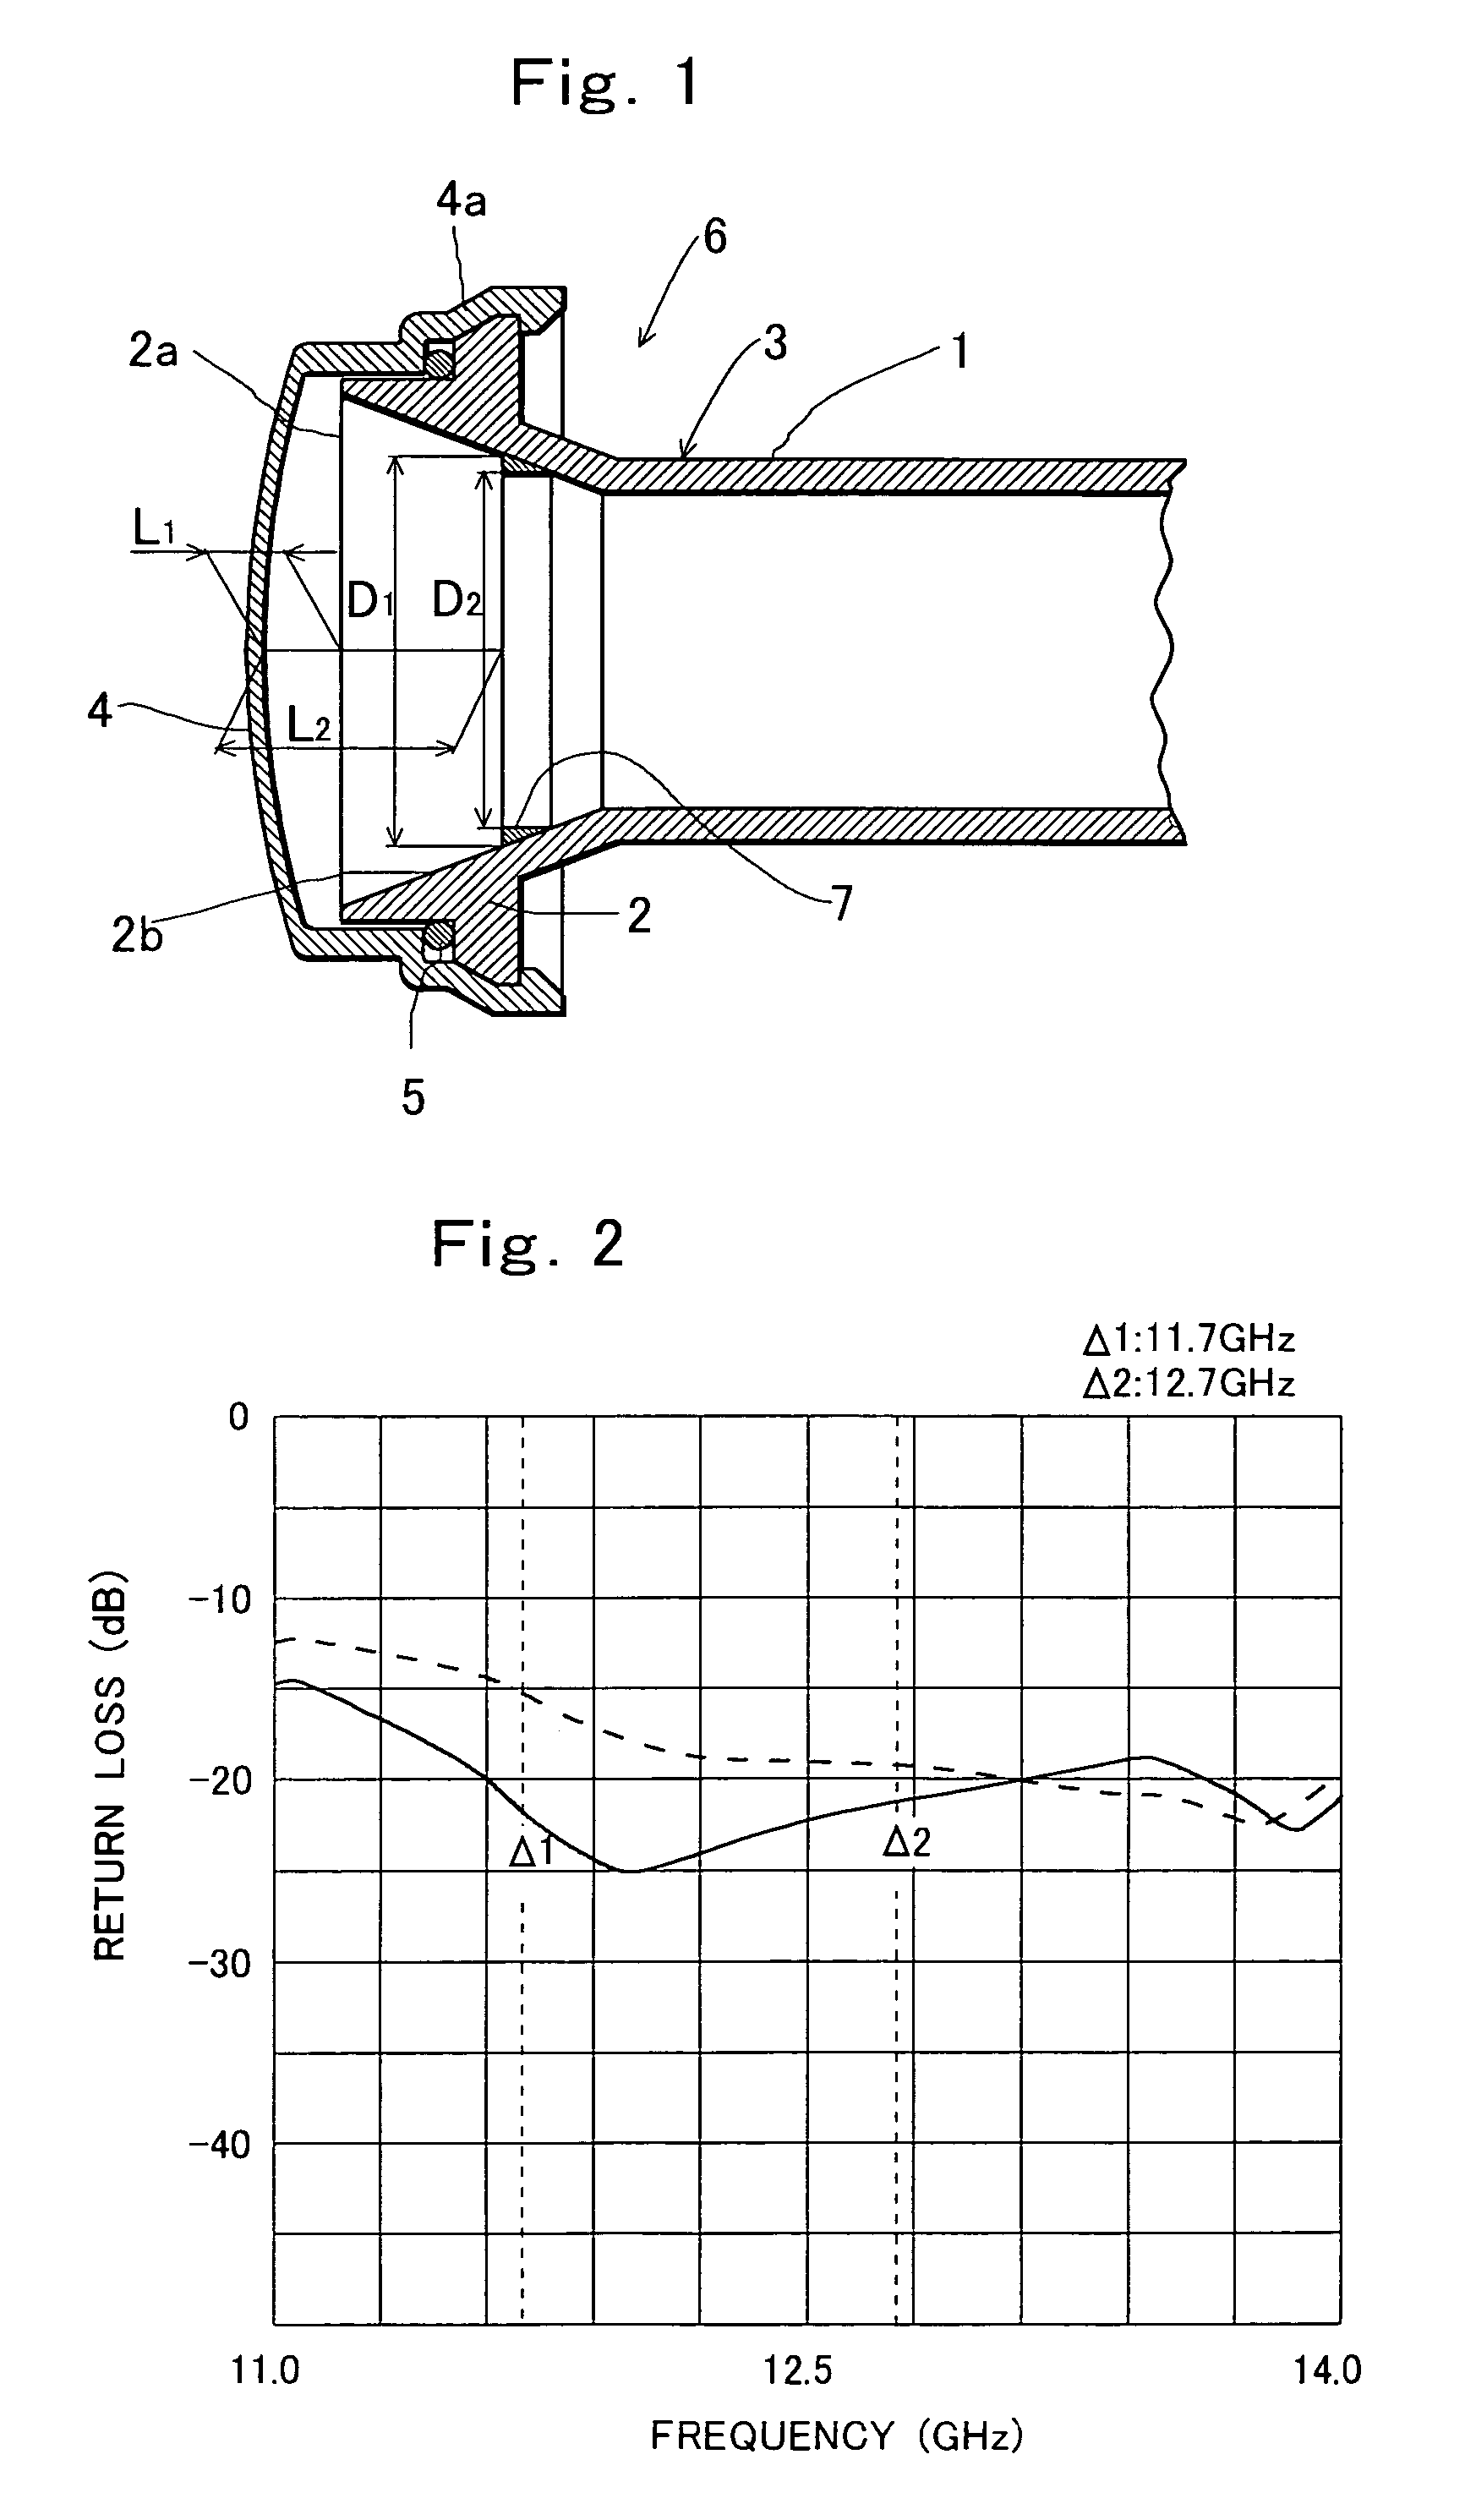 Primary radiator for parabolic antenna